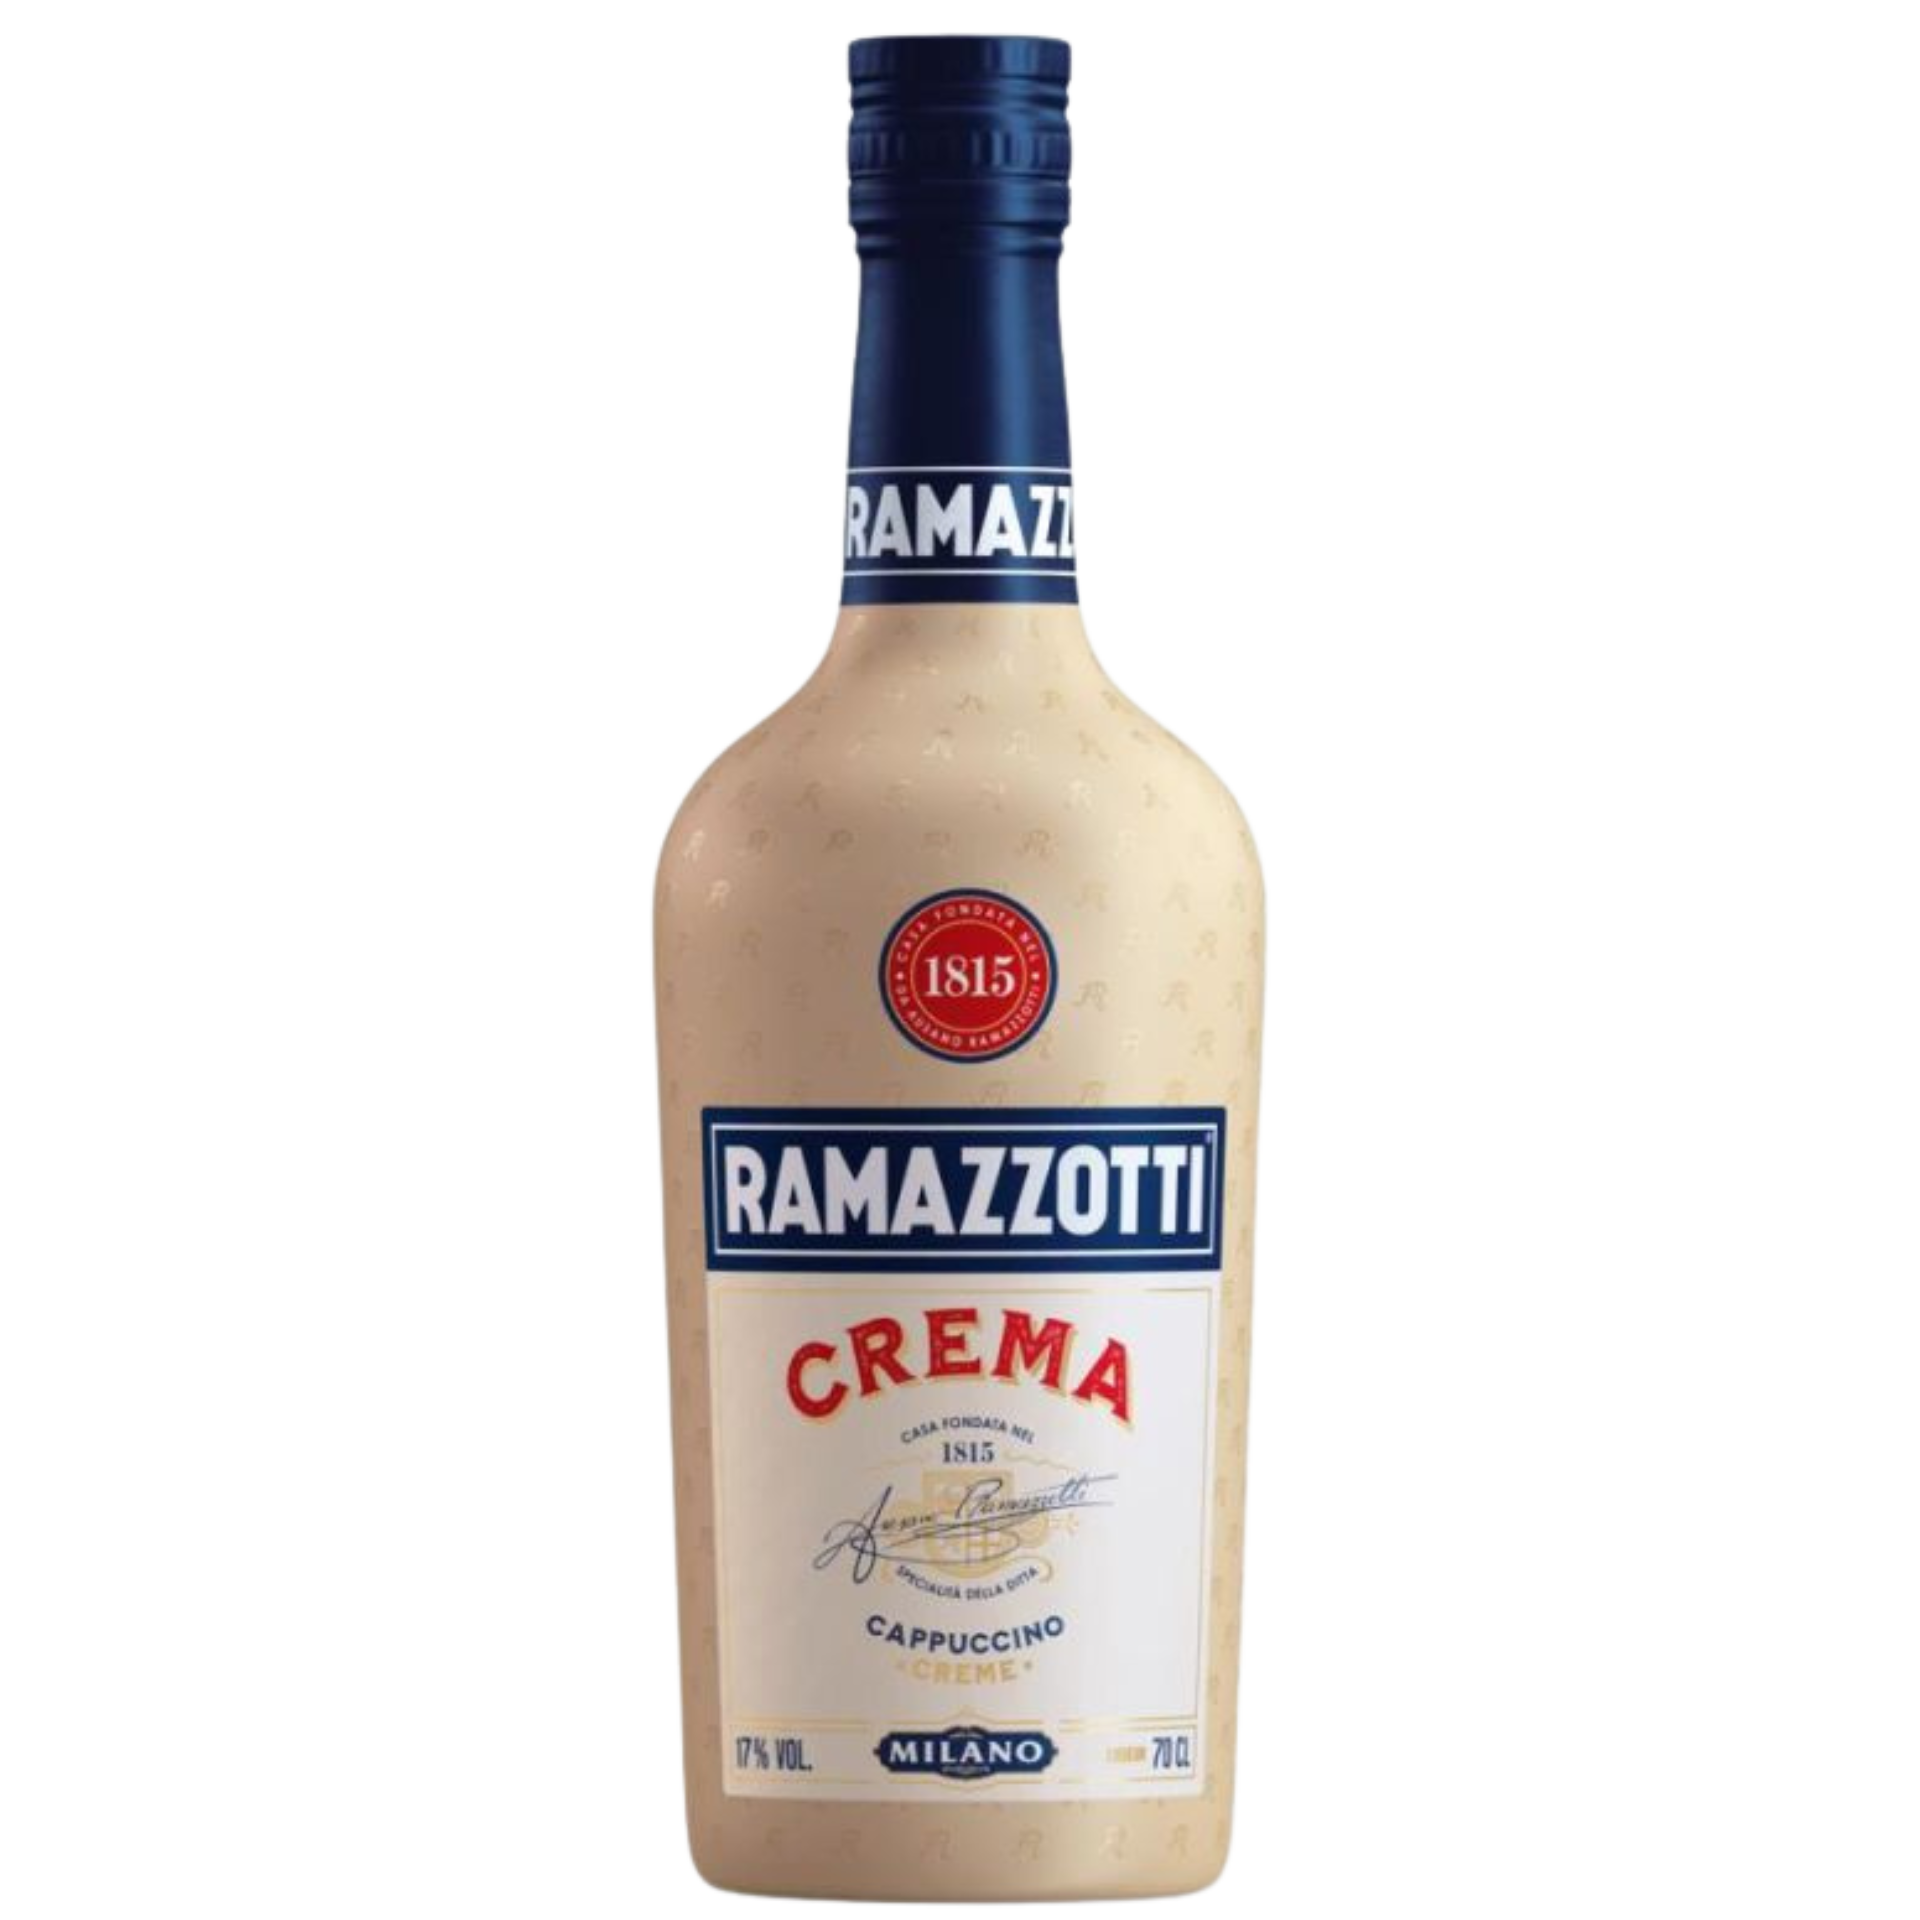 Ramazzotti Crema Likör 17% 0,7l